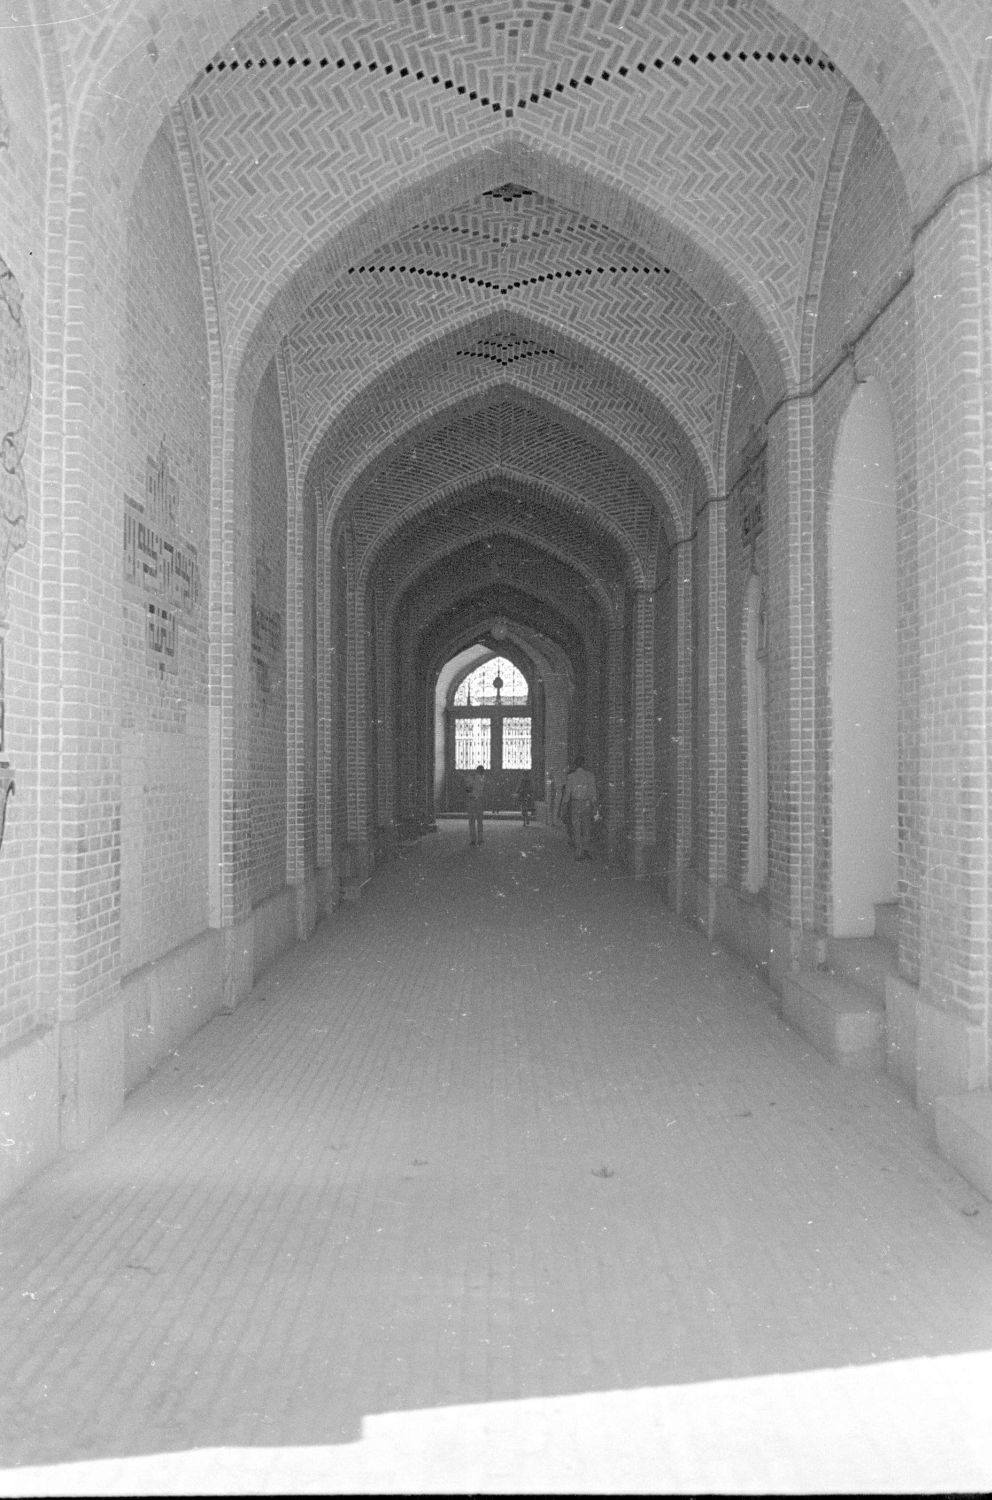 View along corridor leading from a side entrance toward the courtyard, facing the entrance end of the corridor.